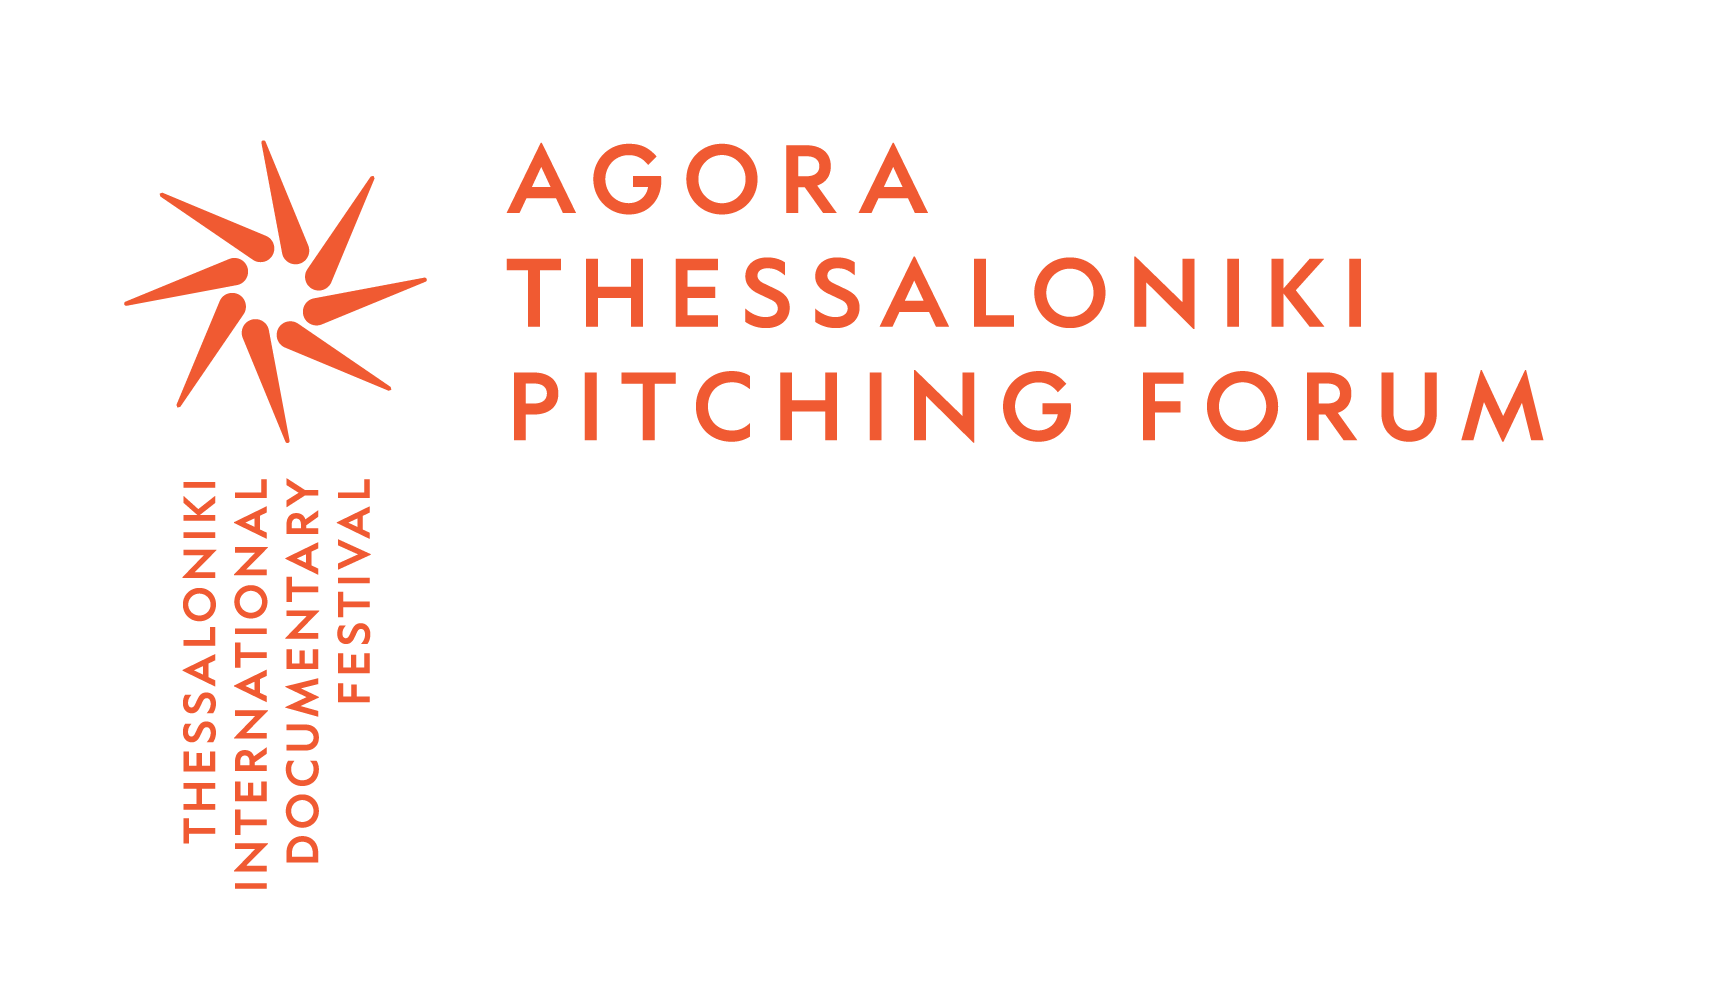 Tidf agora thessaloniki pitching forum